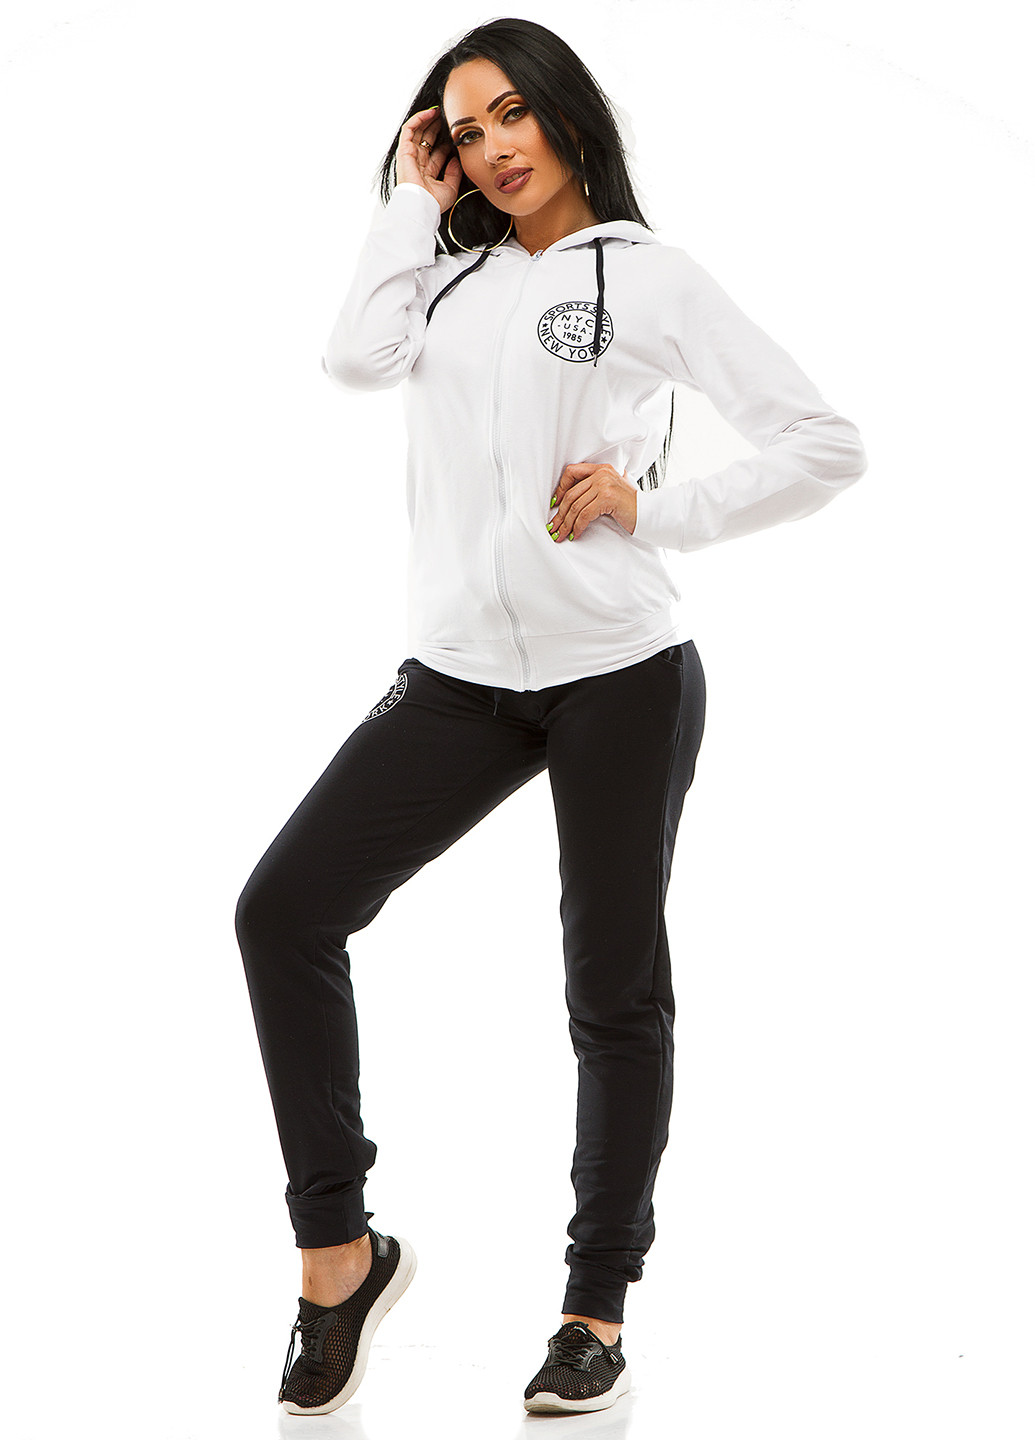 Костюм (толстовка, брюки) Demma брючный логотип белый спортивный